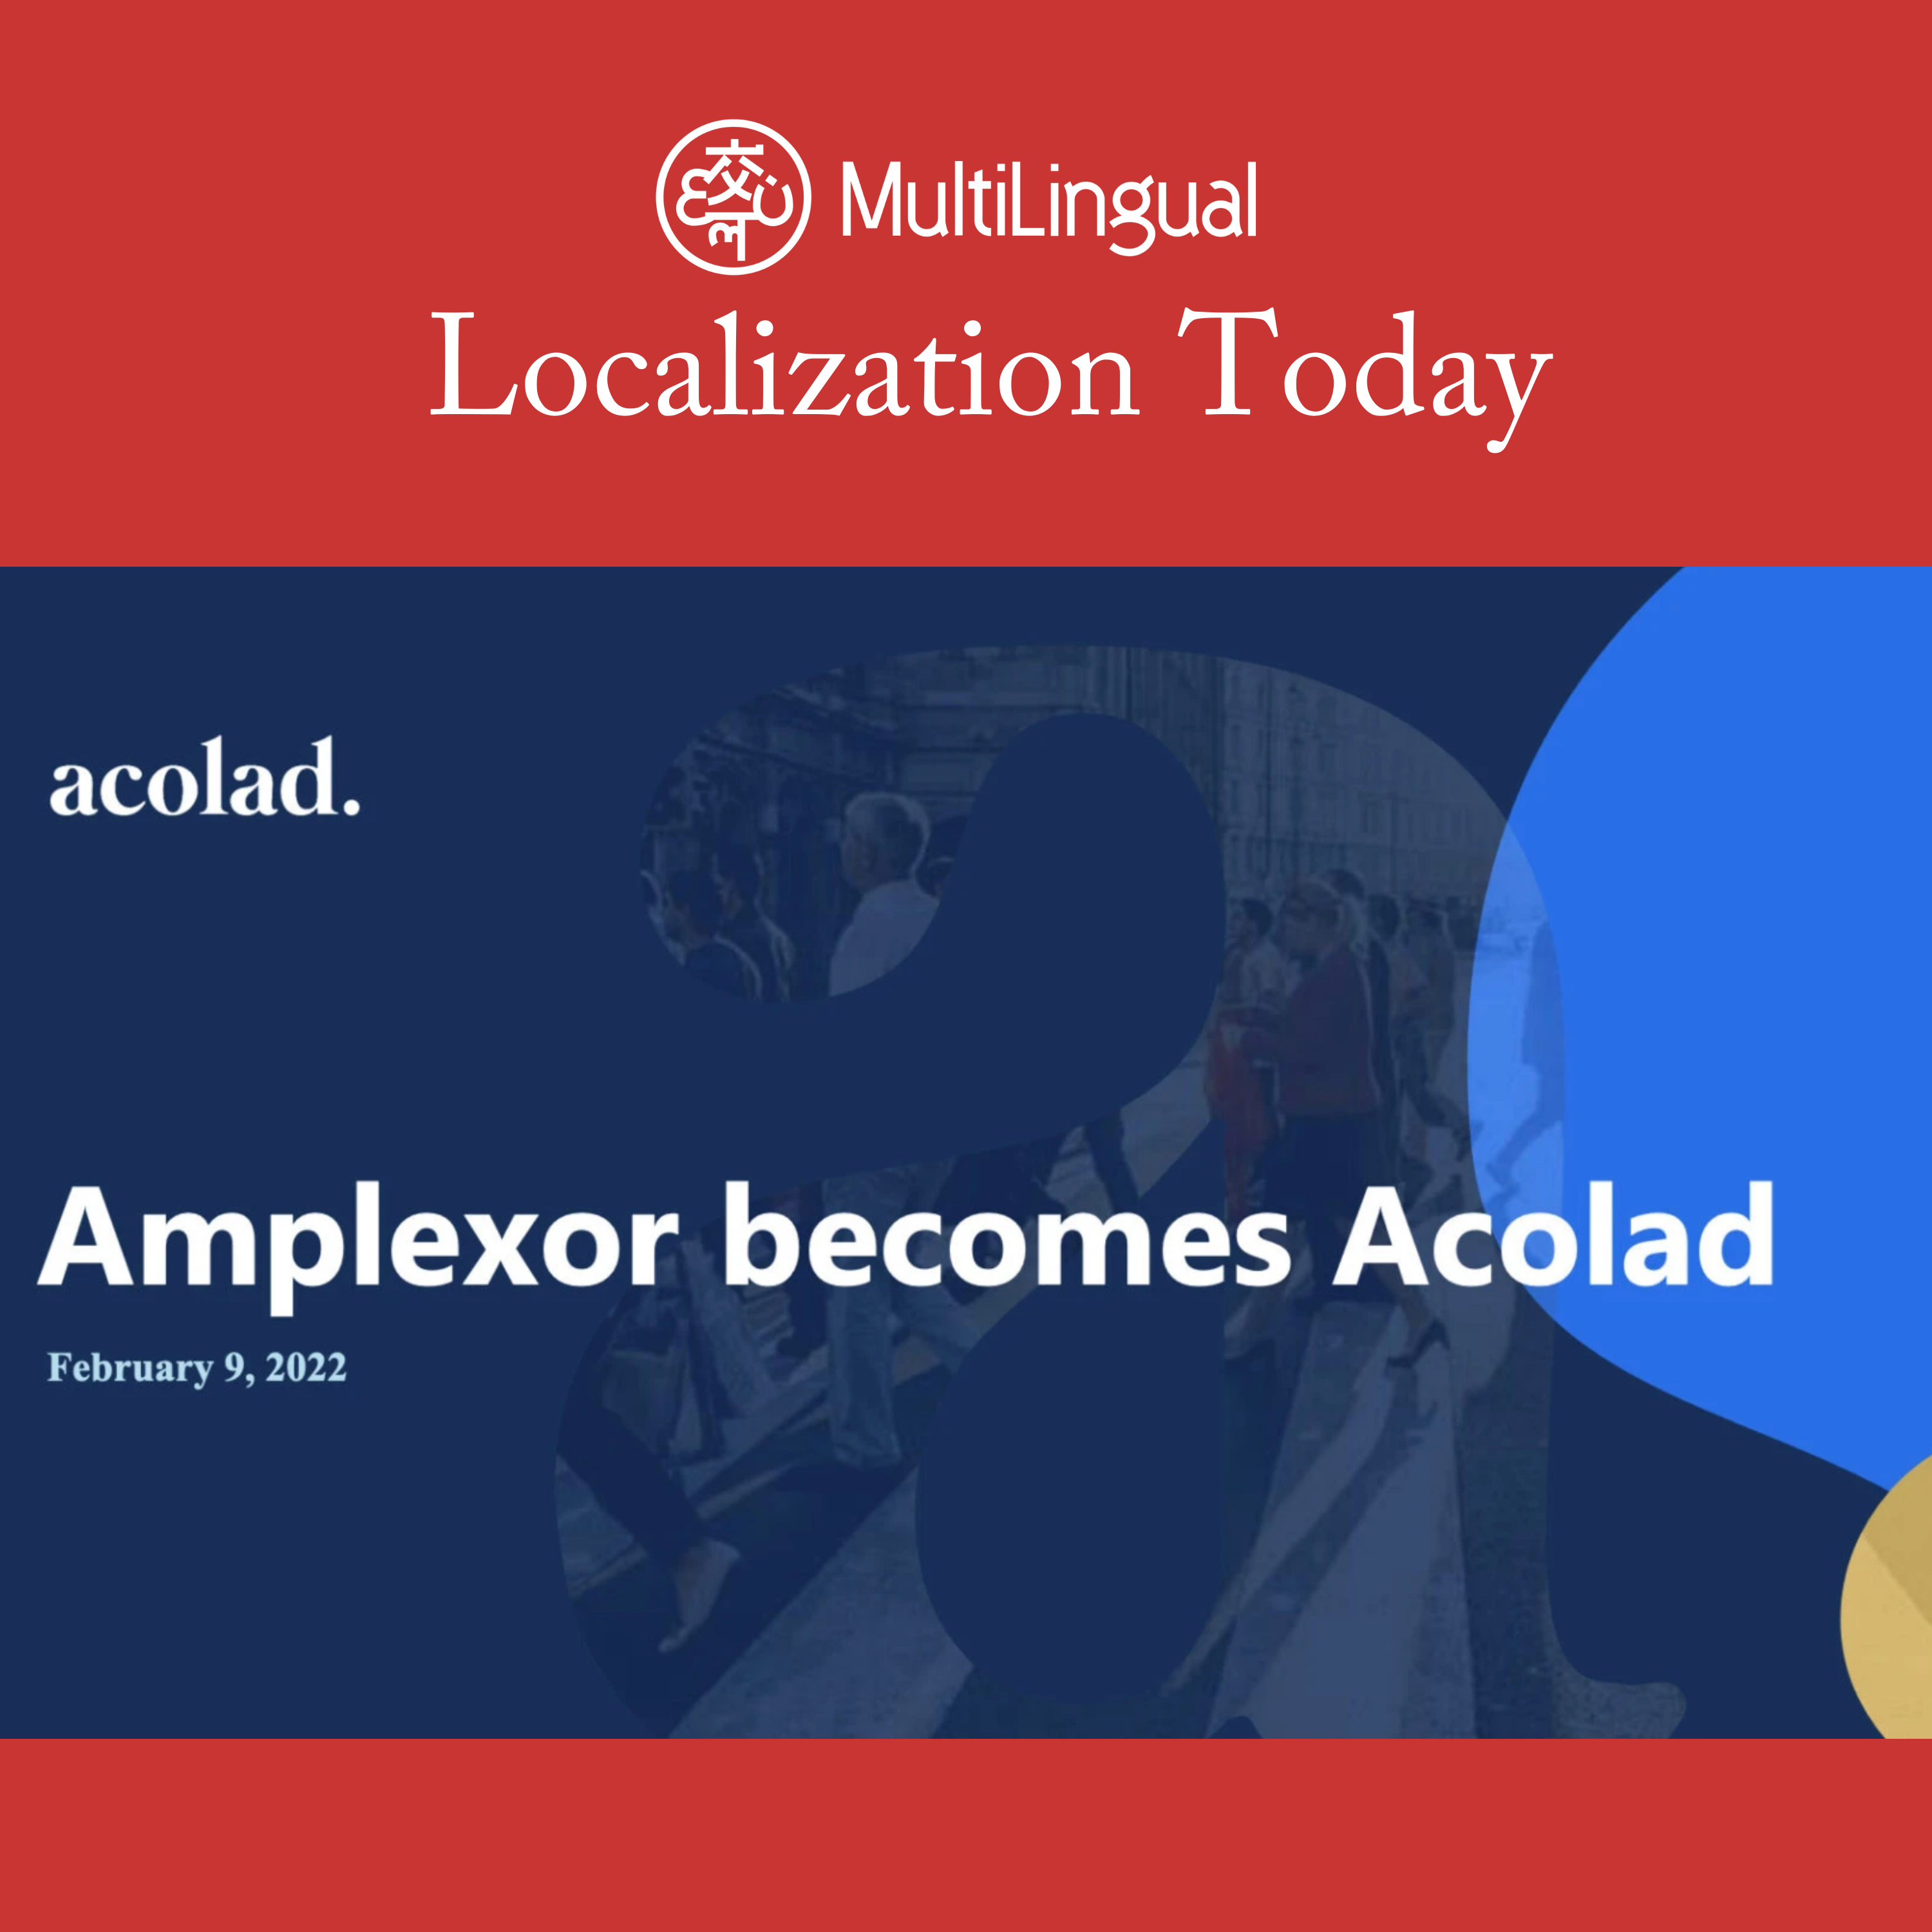 Following merger, Amplexor adopts Acolad brand